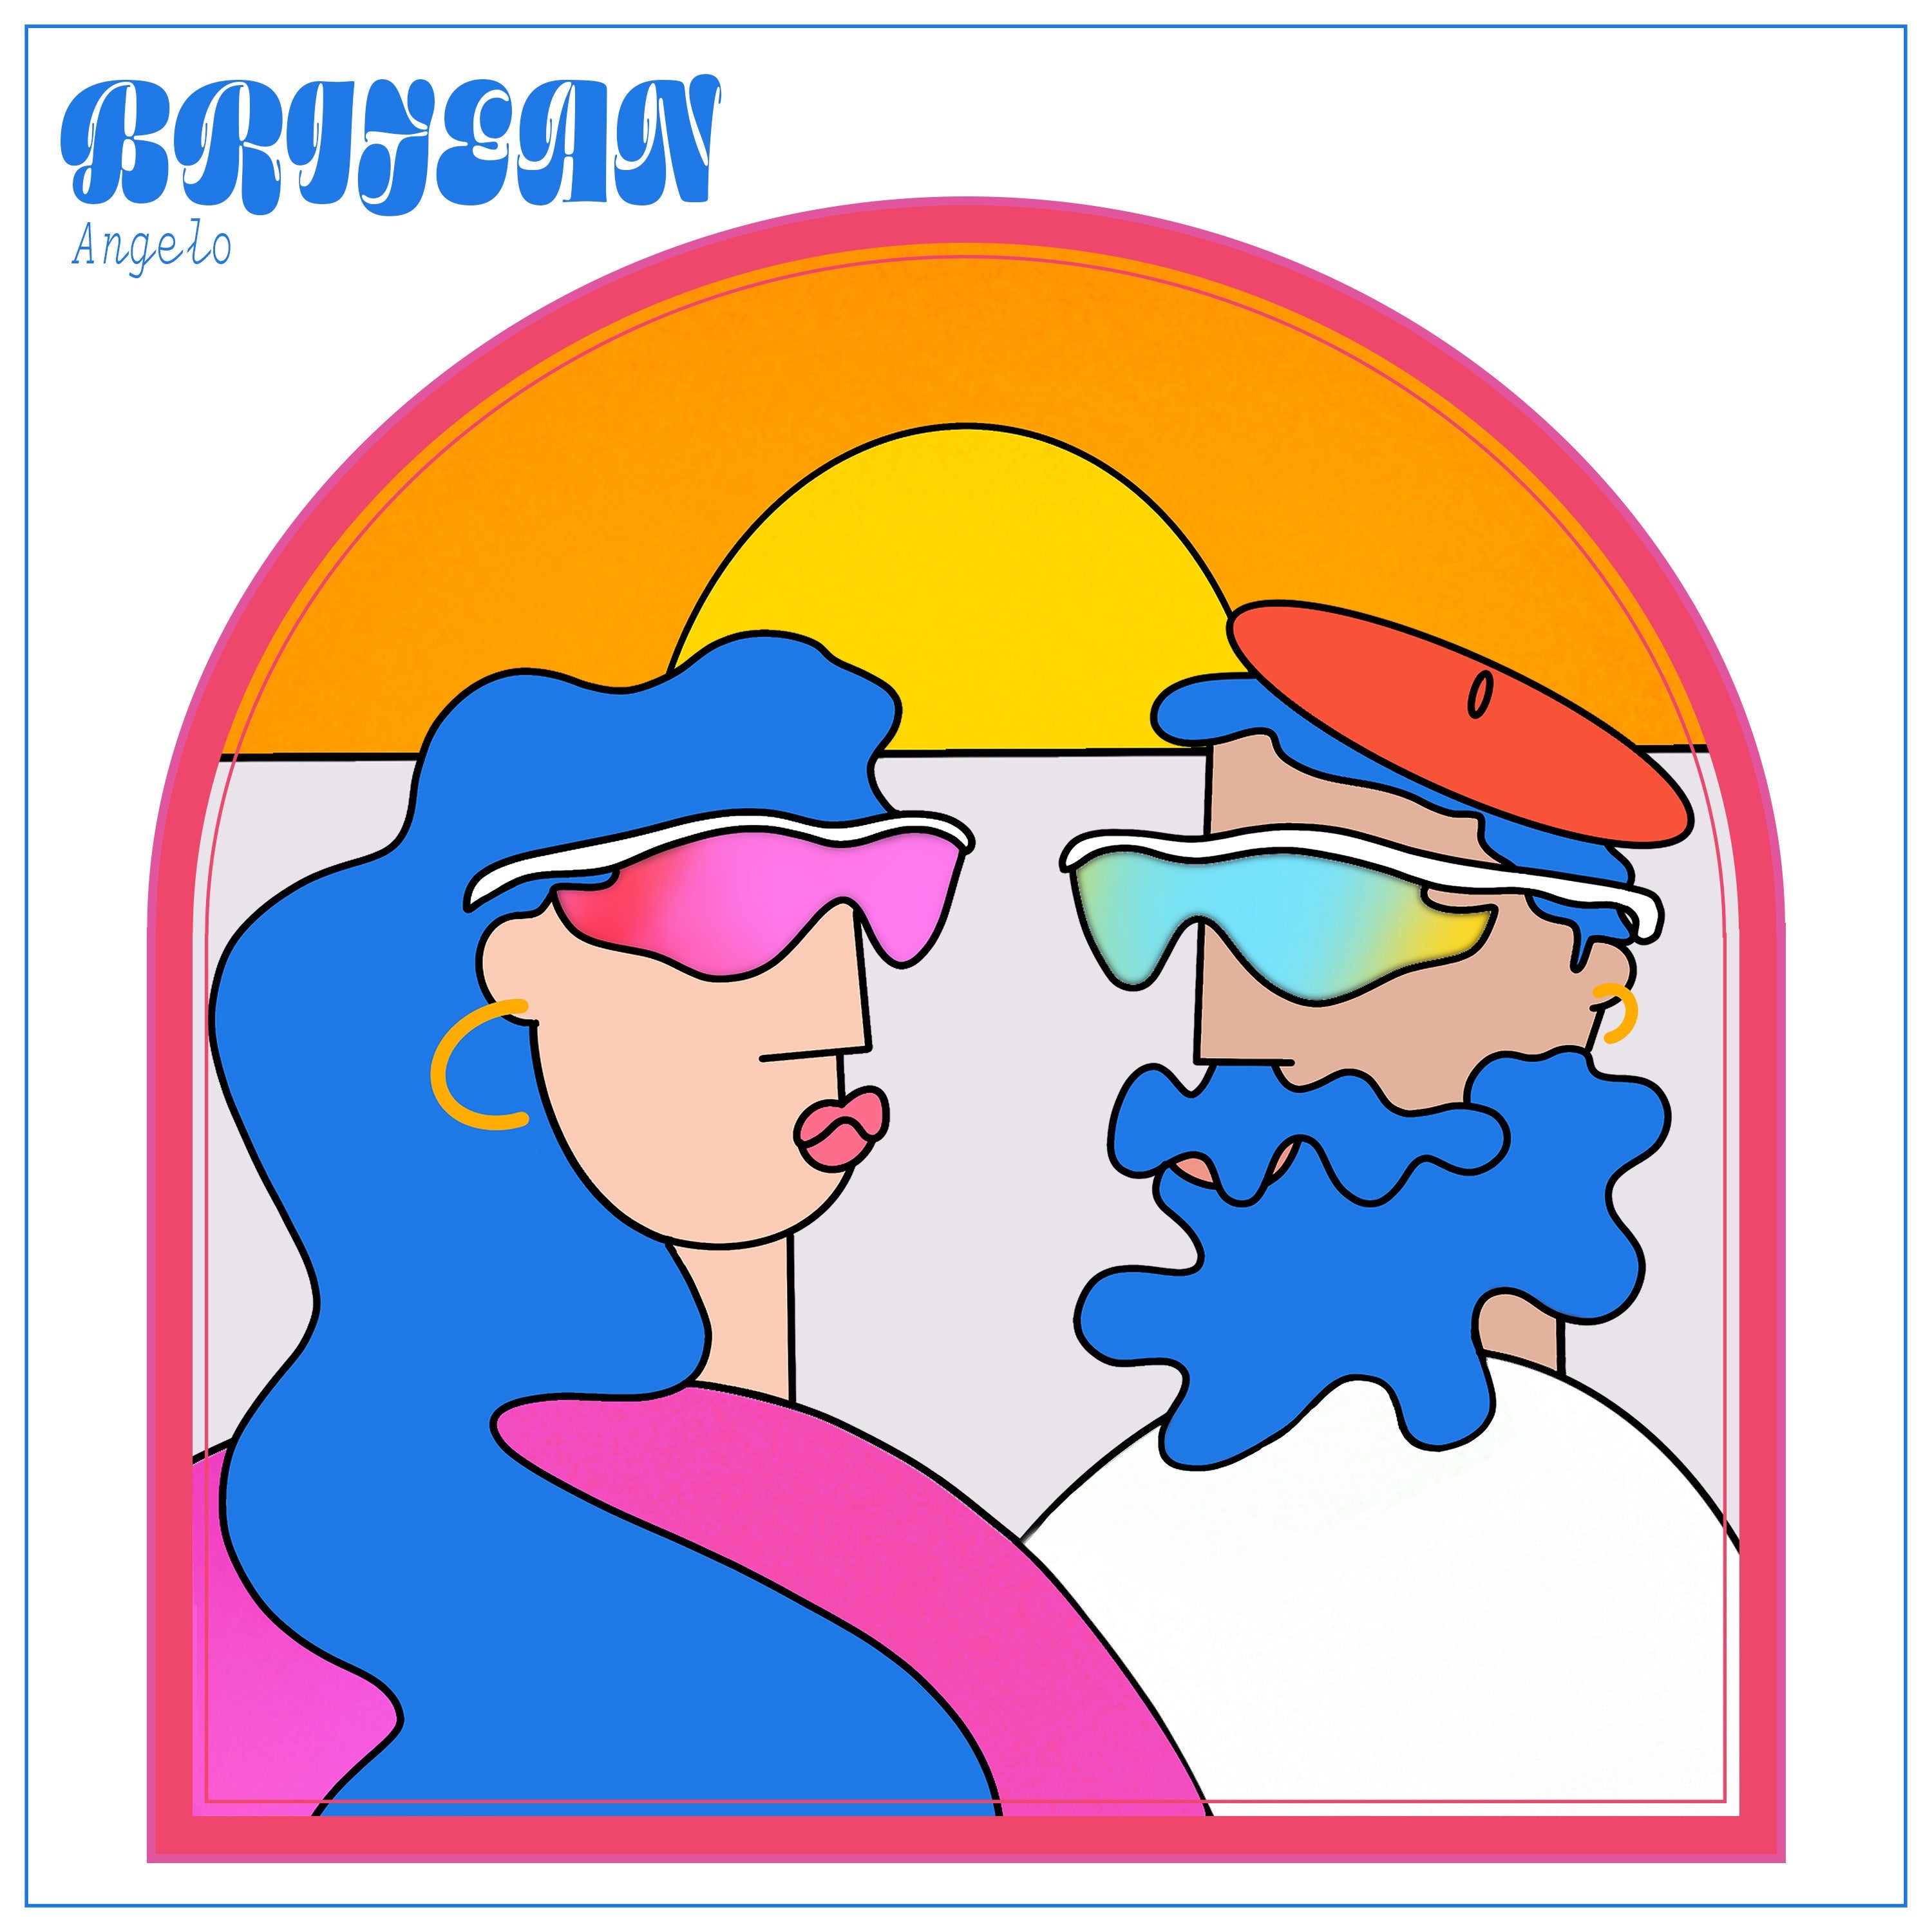 [DAMAGED] Brijean - Angelo [Pink & Blue Vinyl]